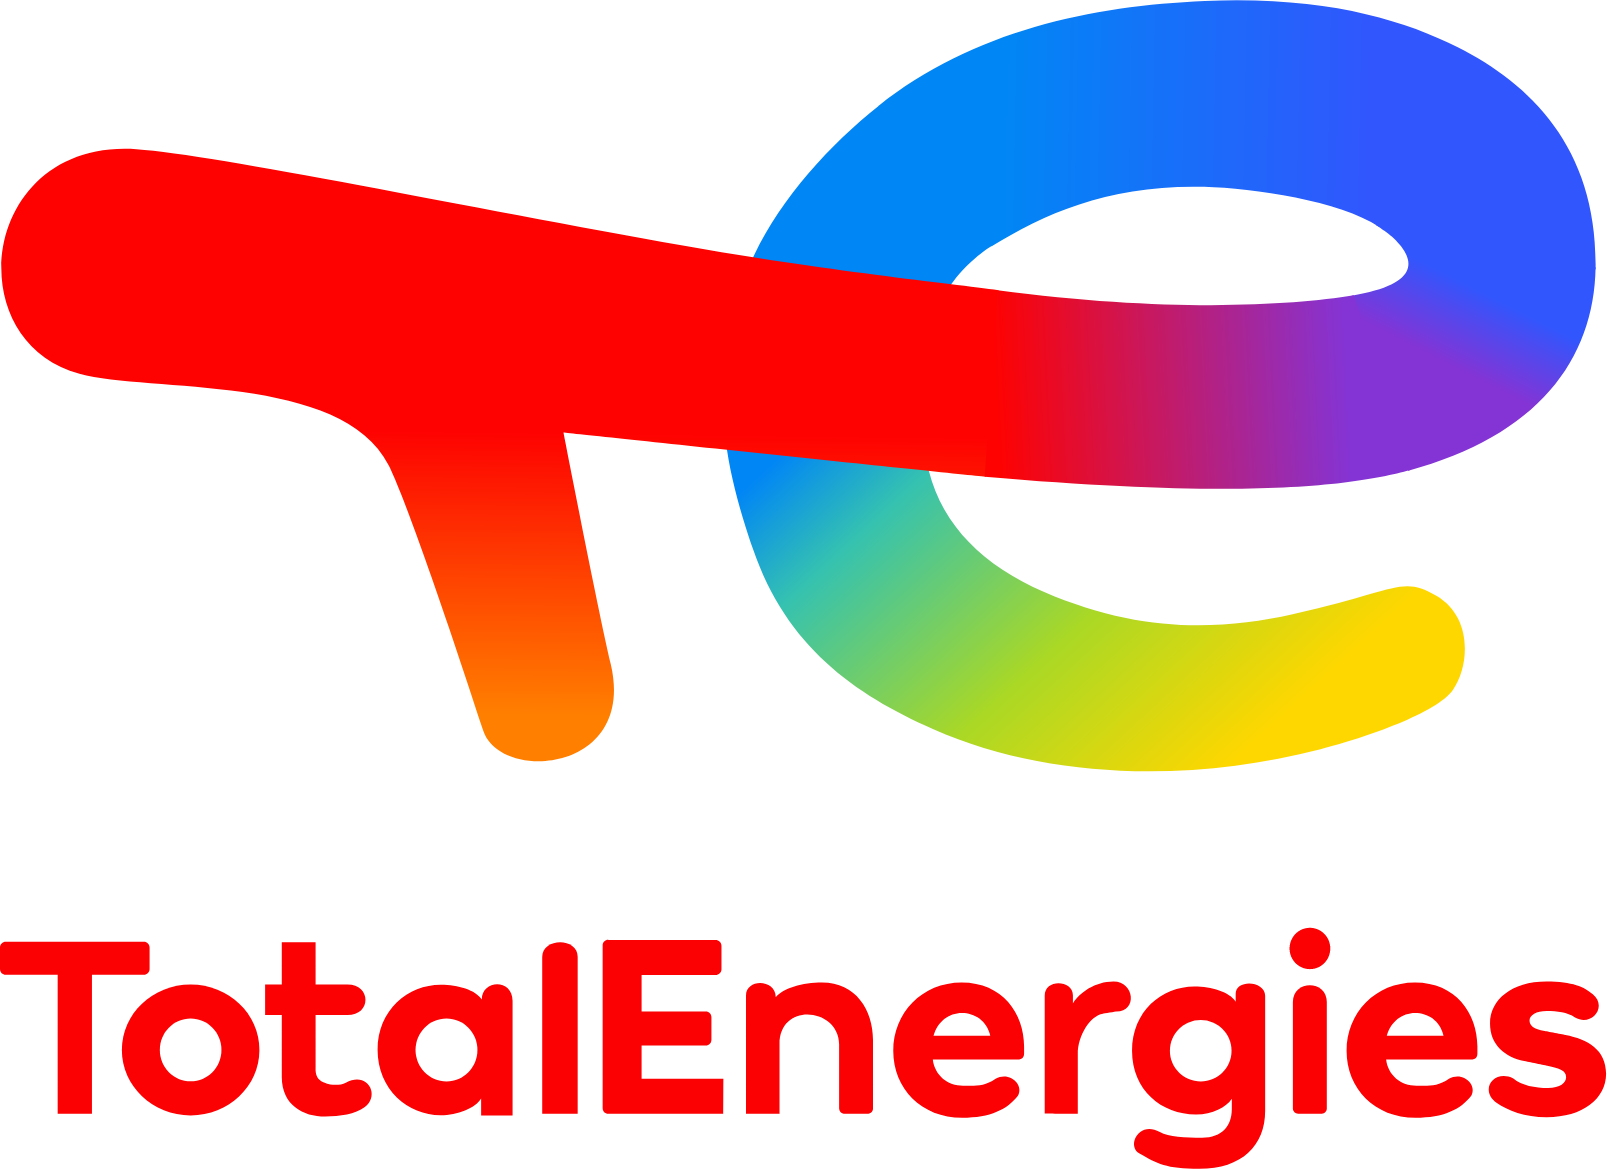 TotalEnergies logo large (transparent PNG)